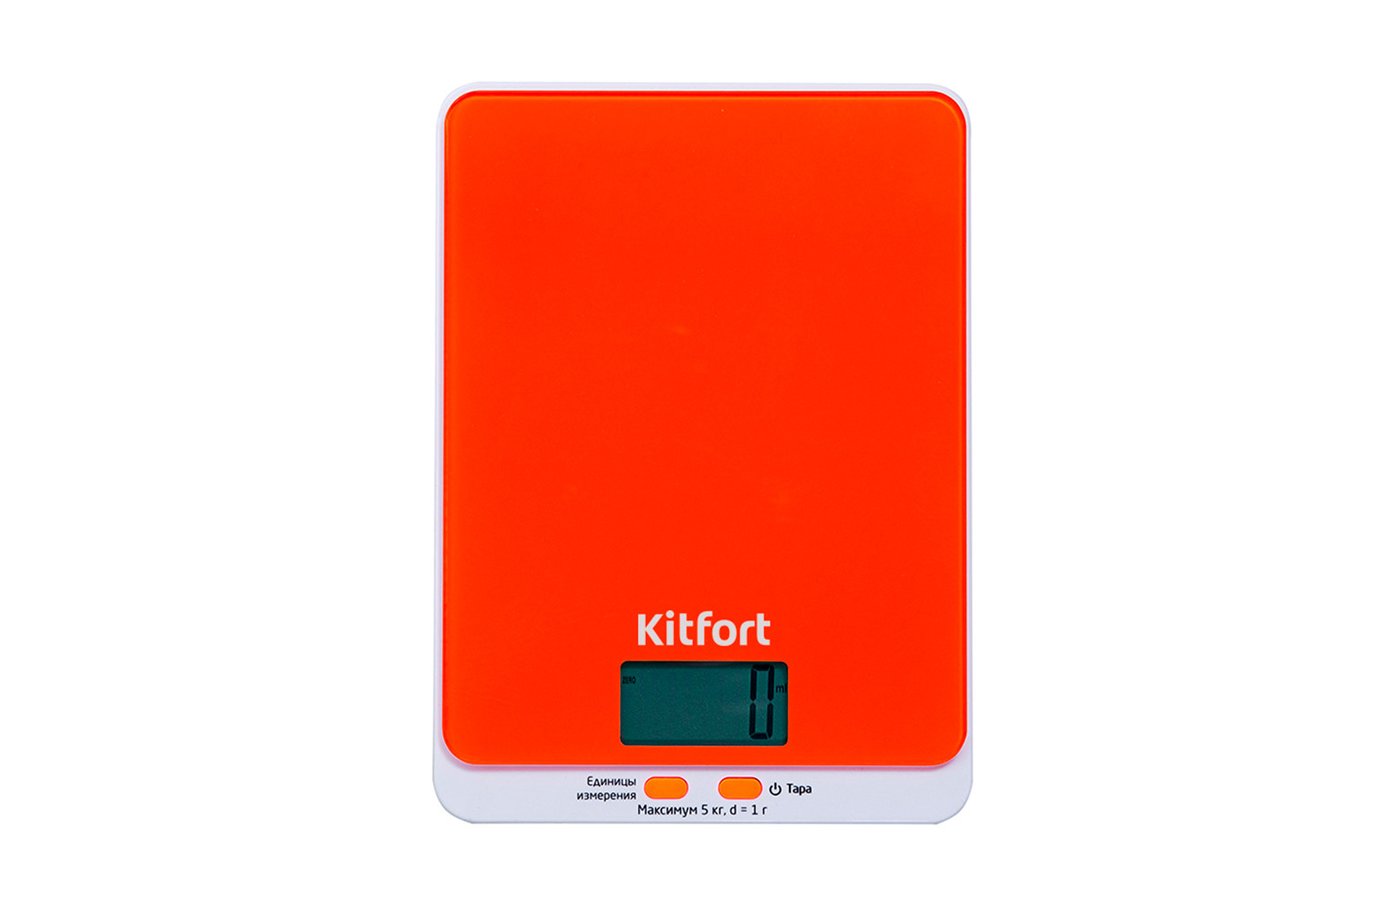 Кухонные весы kitfort 803. Кухонные весы Kitfort KT-803. Кухонные весы Китфорт кт-803. Весы Kitfort KT-803. KT-803-5.